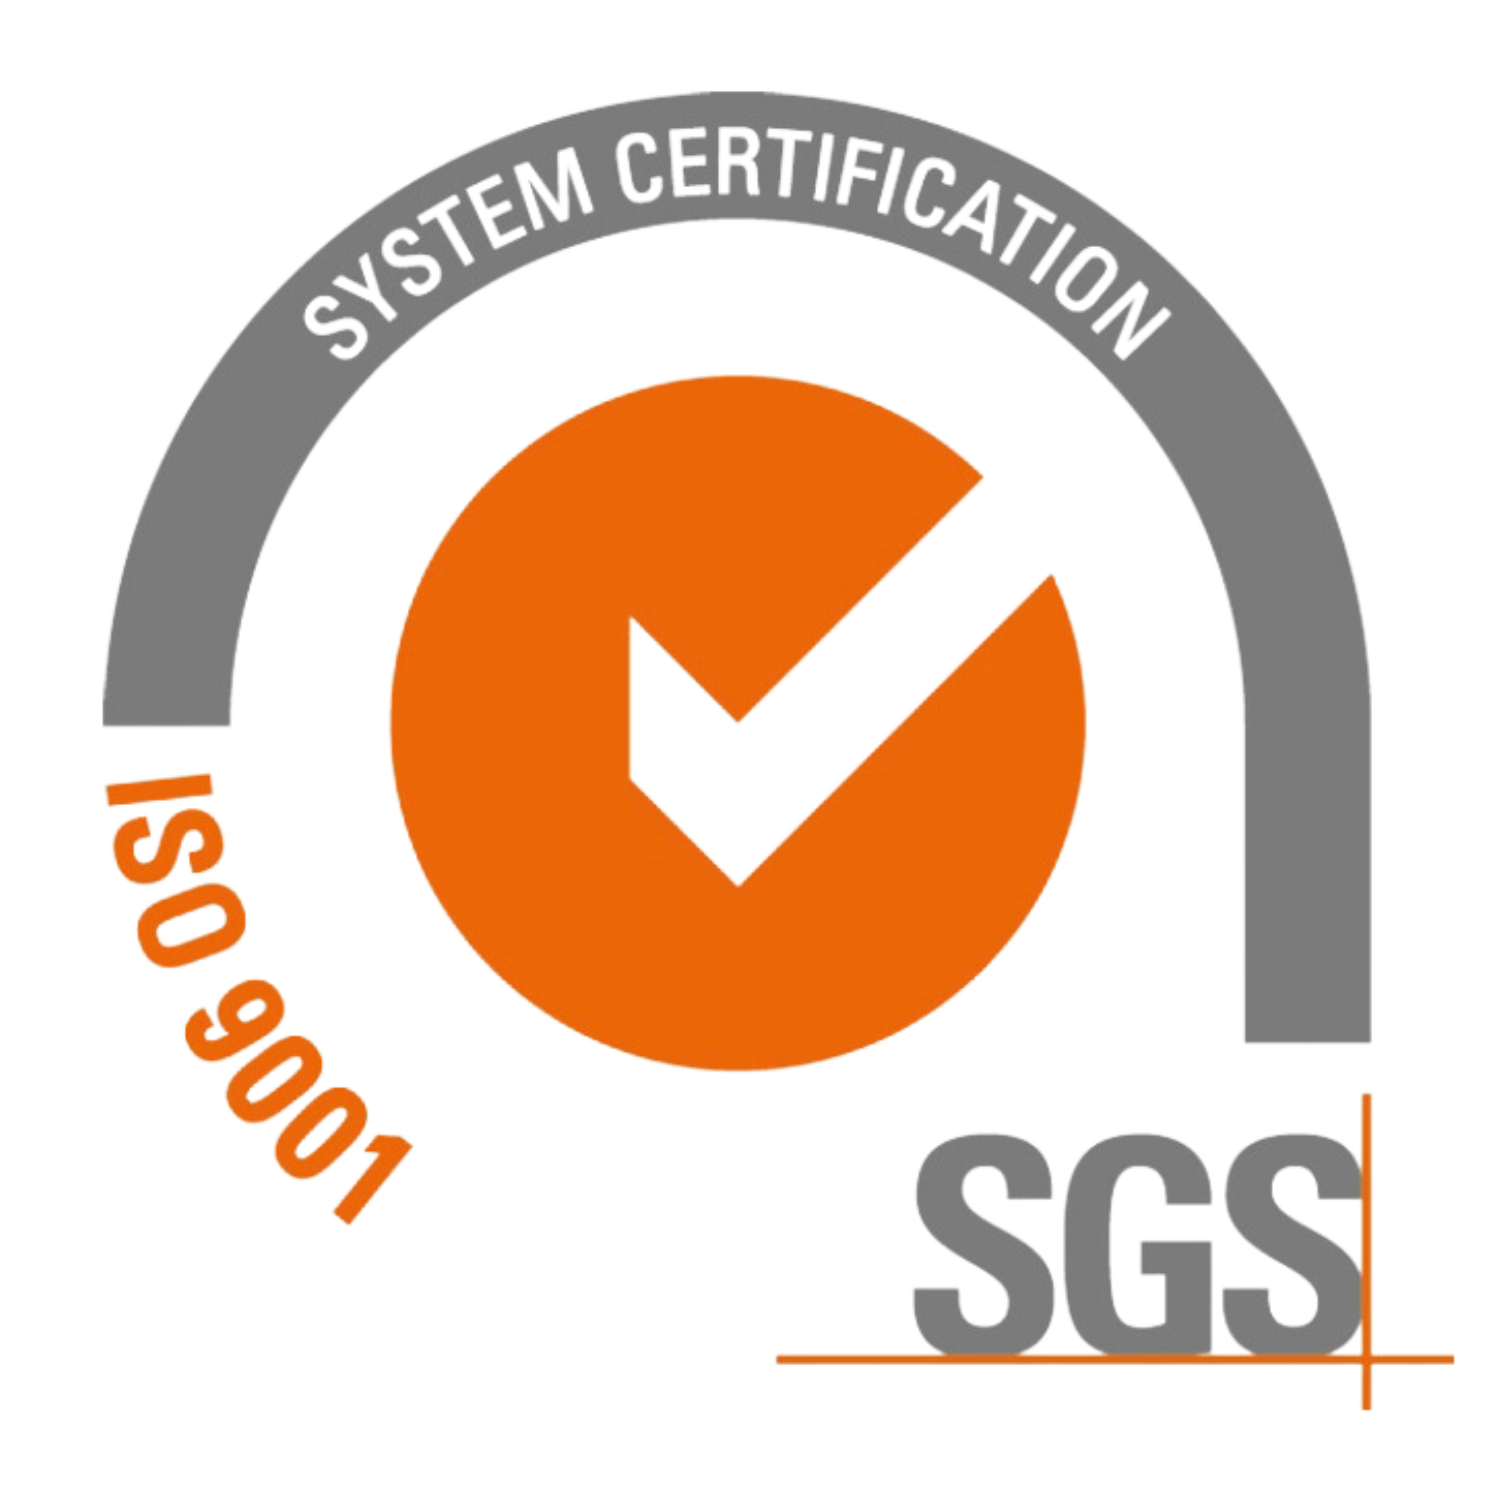 Evolve Talent - Obtaining ISO Certification 9001 - SGS Provider